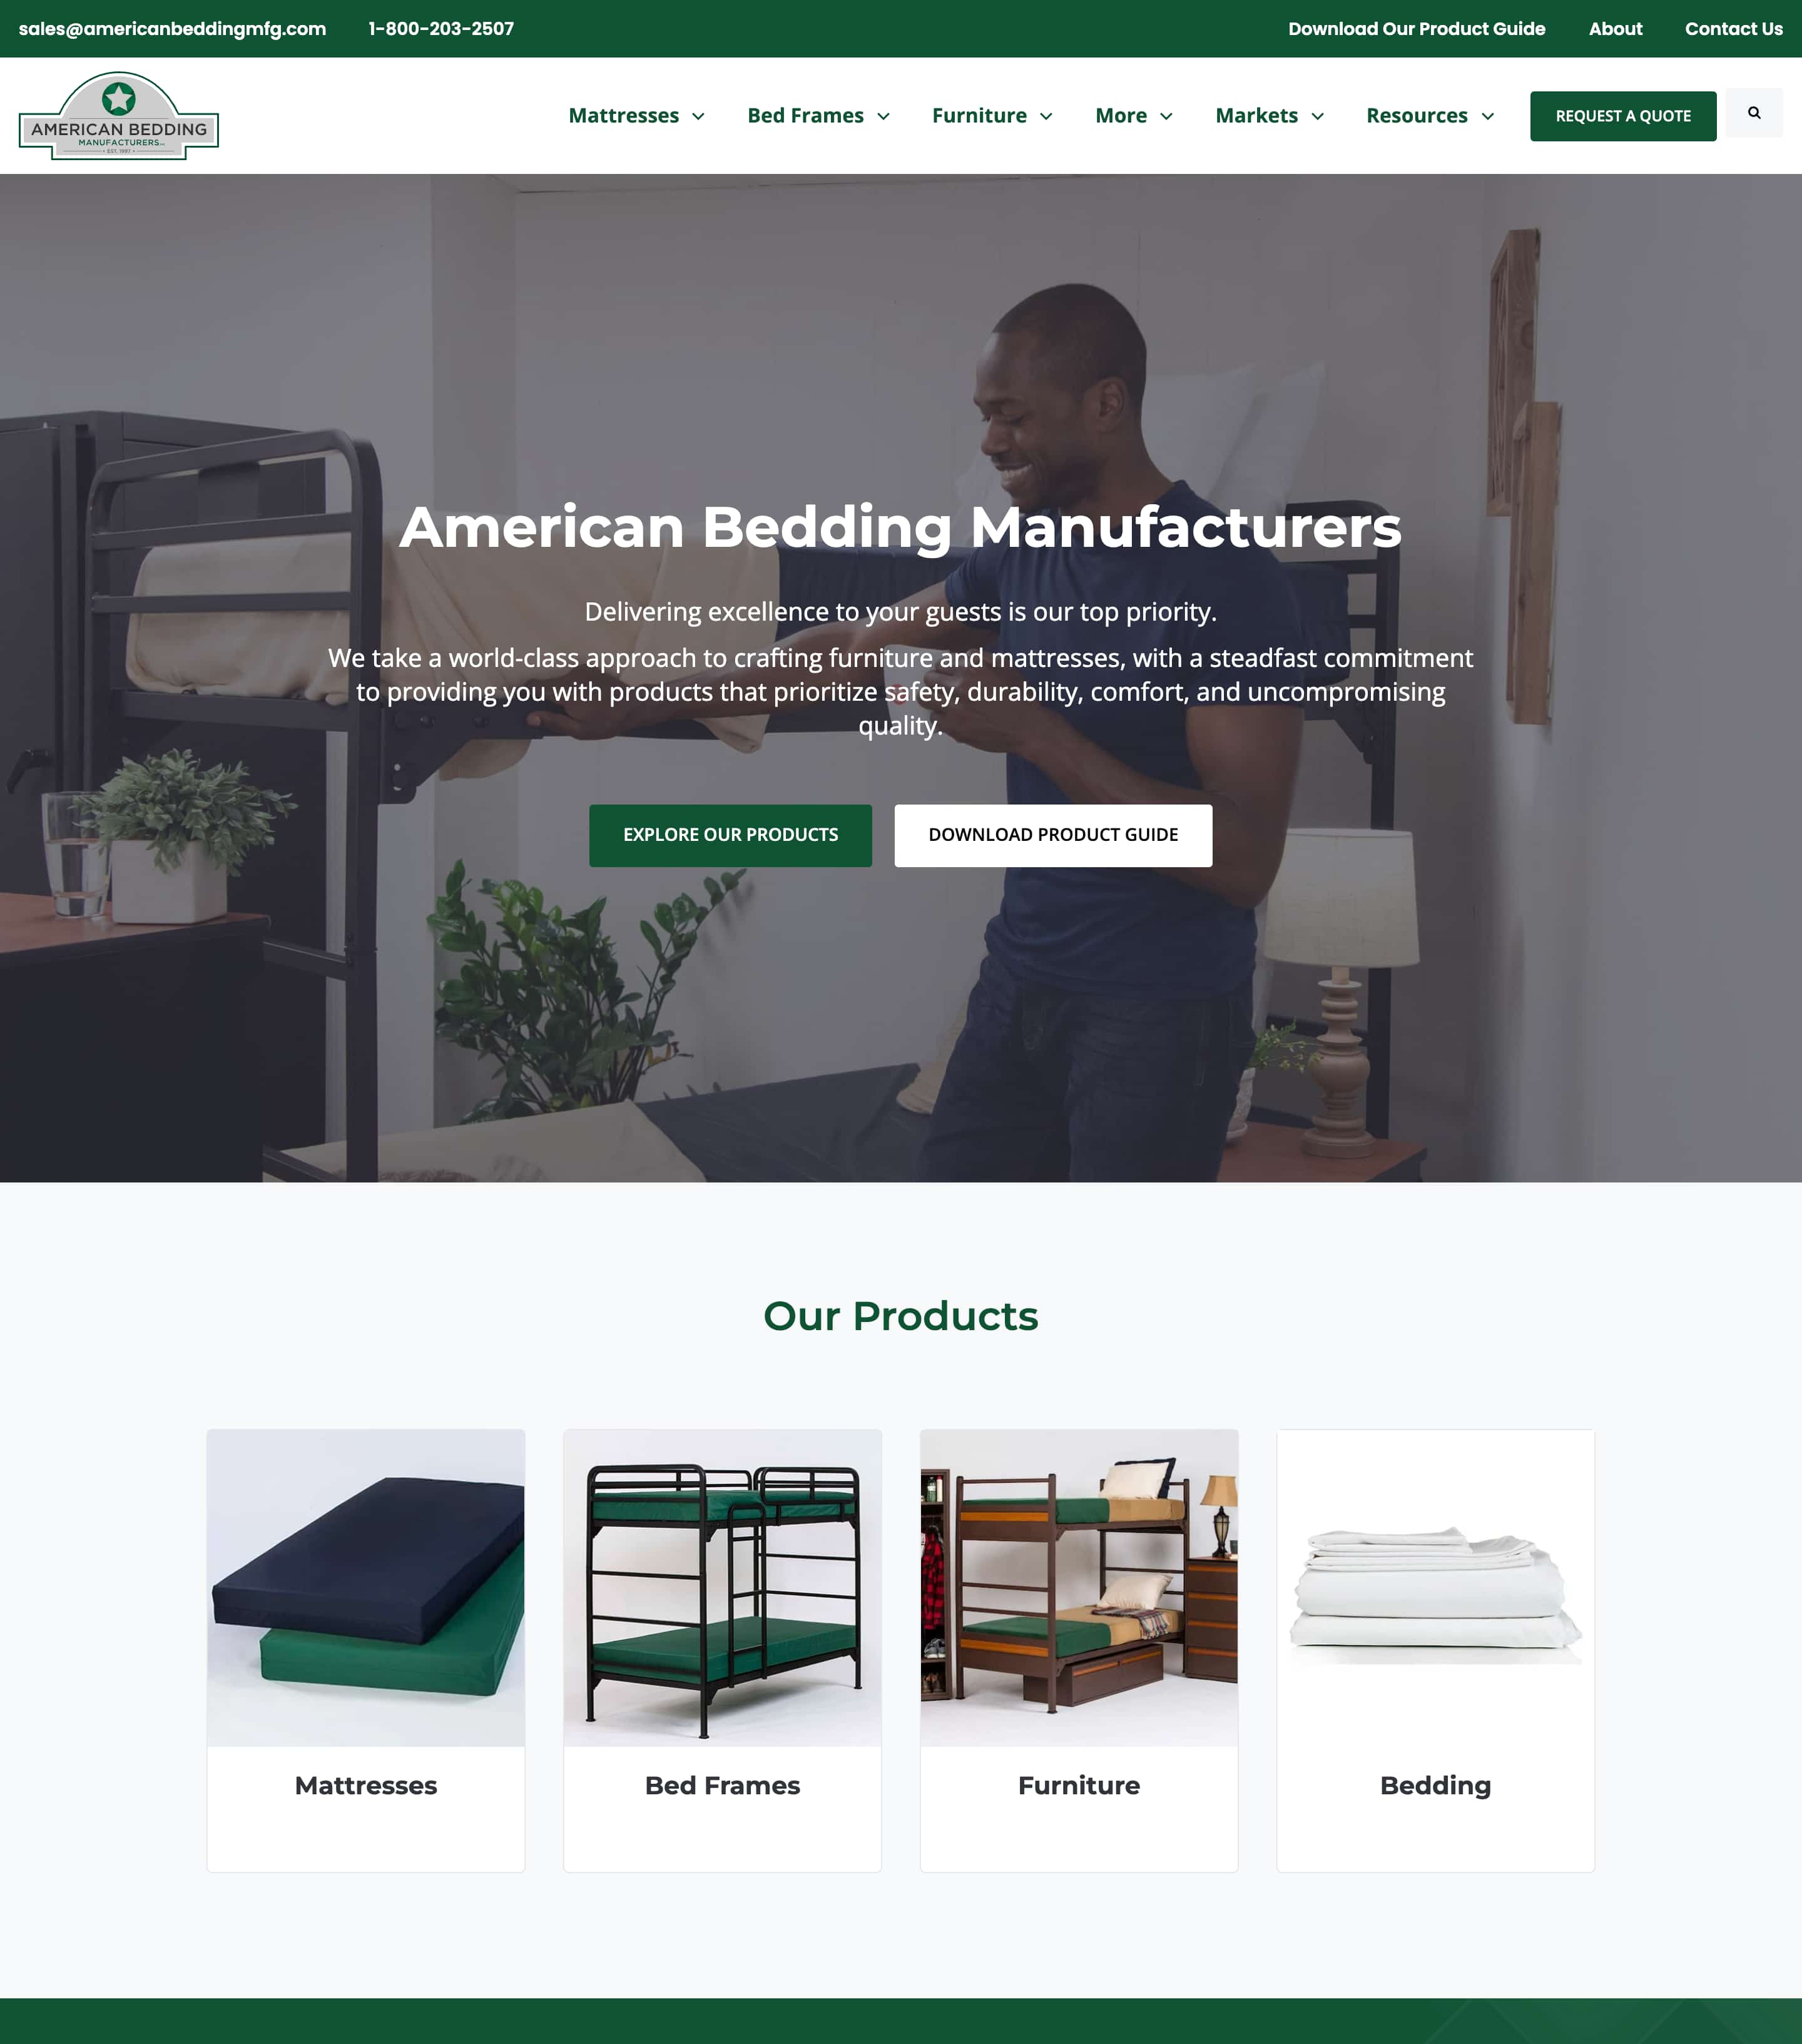 American Bedding Manufacturers Inc. website image